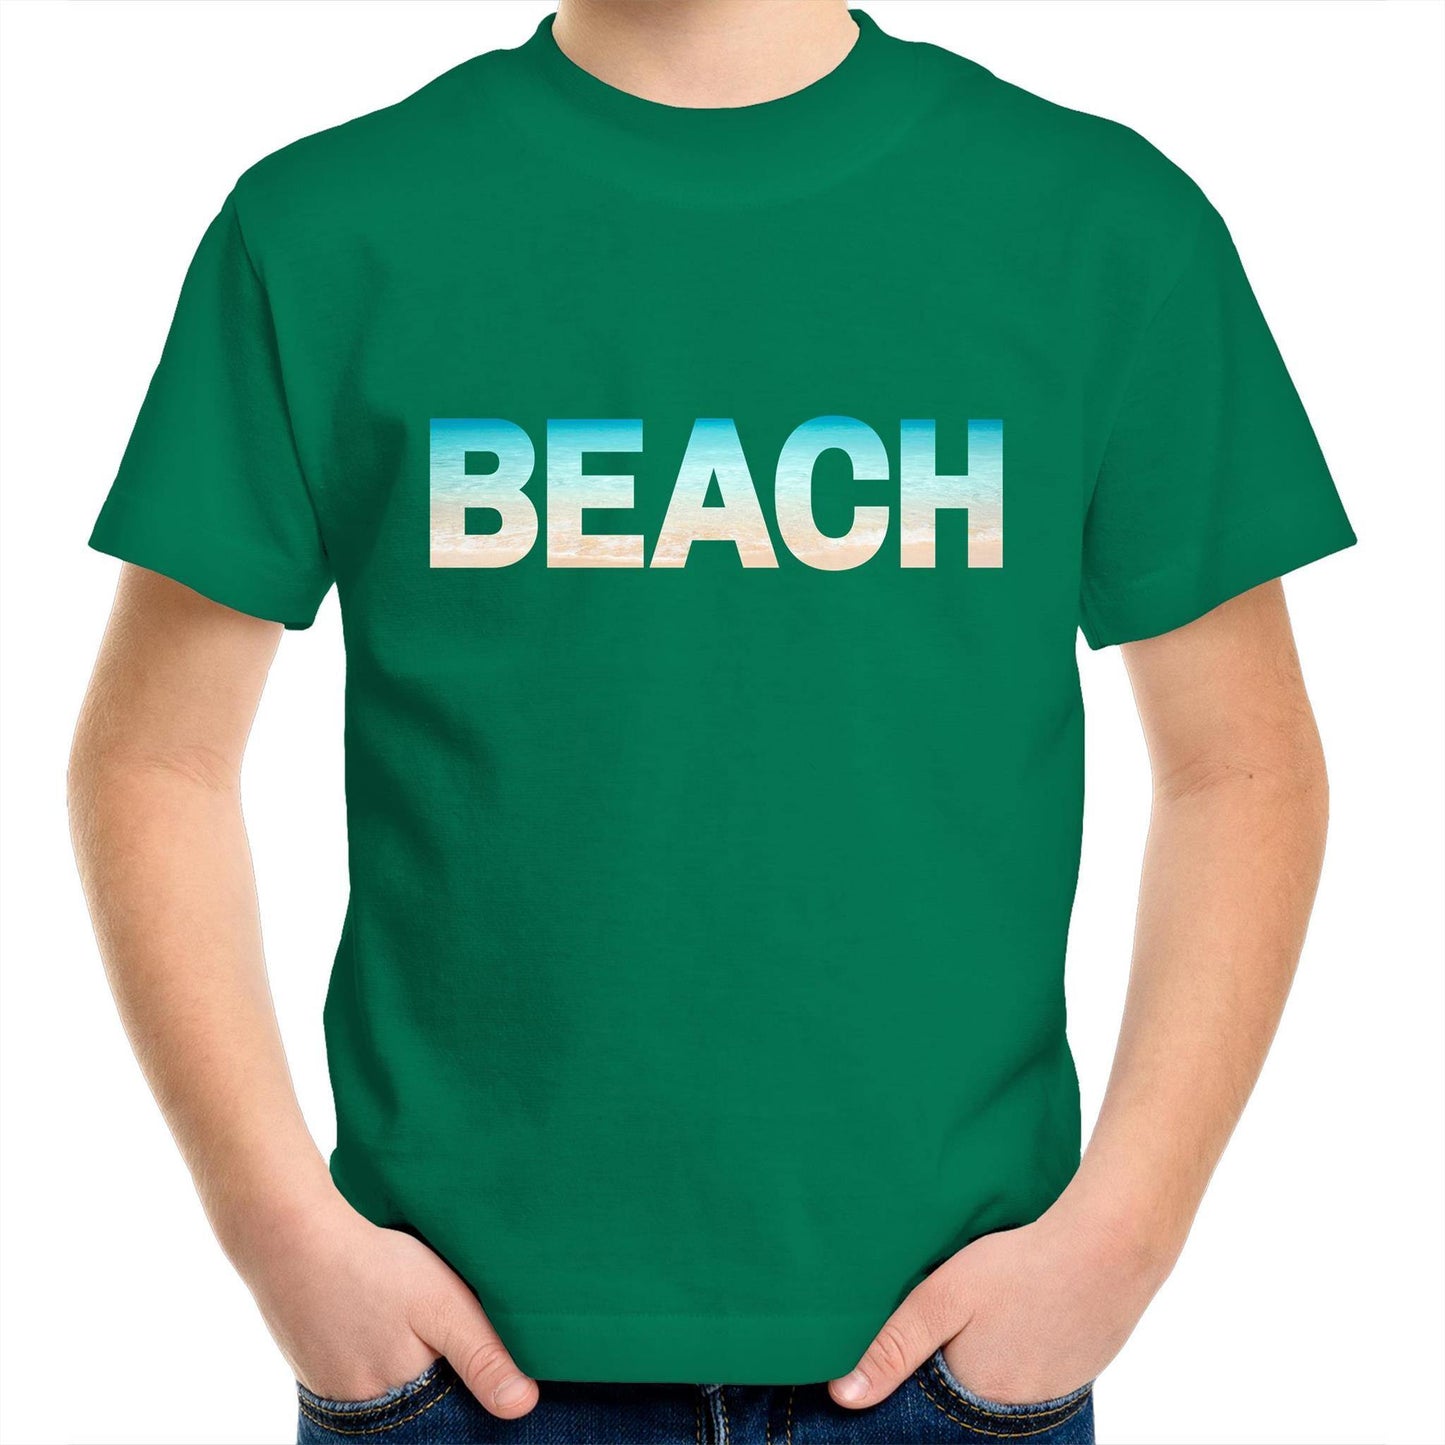 Beach - Kids Youth Crew T-Shirt Kelly Green Kids Youth T-shirt Summer